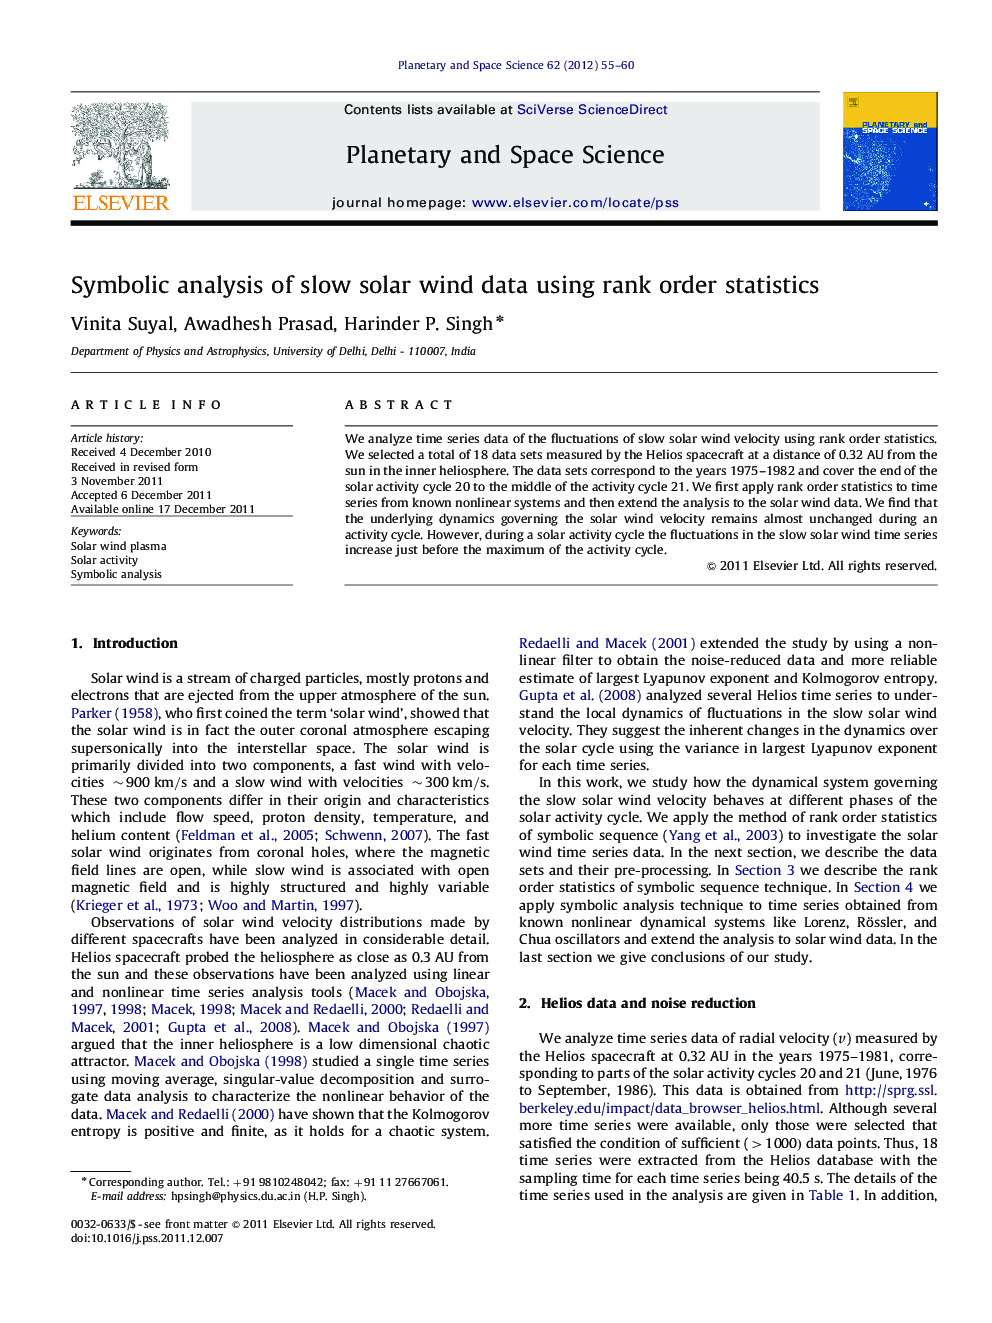 Symbolic analysis of slow solar wind data using rank order statistics